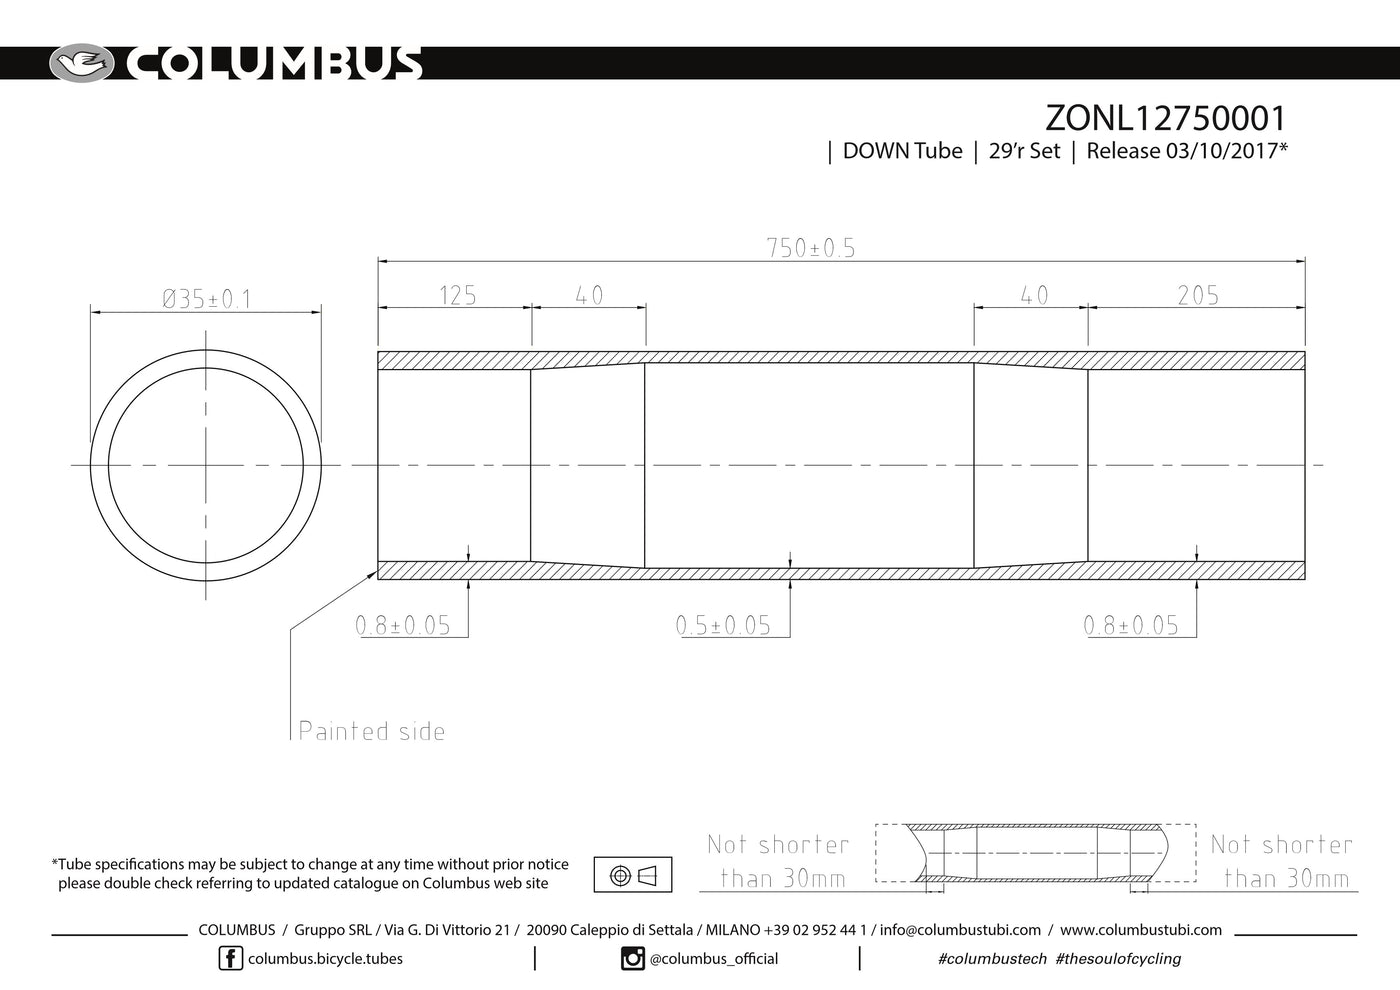 ZONL12750001 - Columbus Tubing Zona down tube - 35 diameter - .8/.5/.8 wall thickness. Length = 750